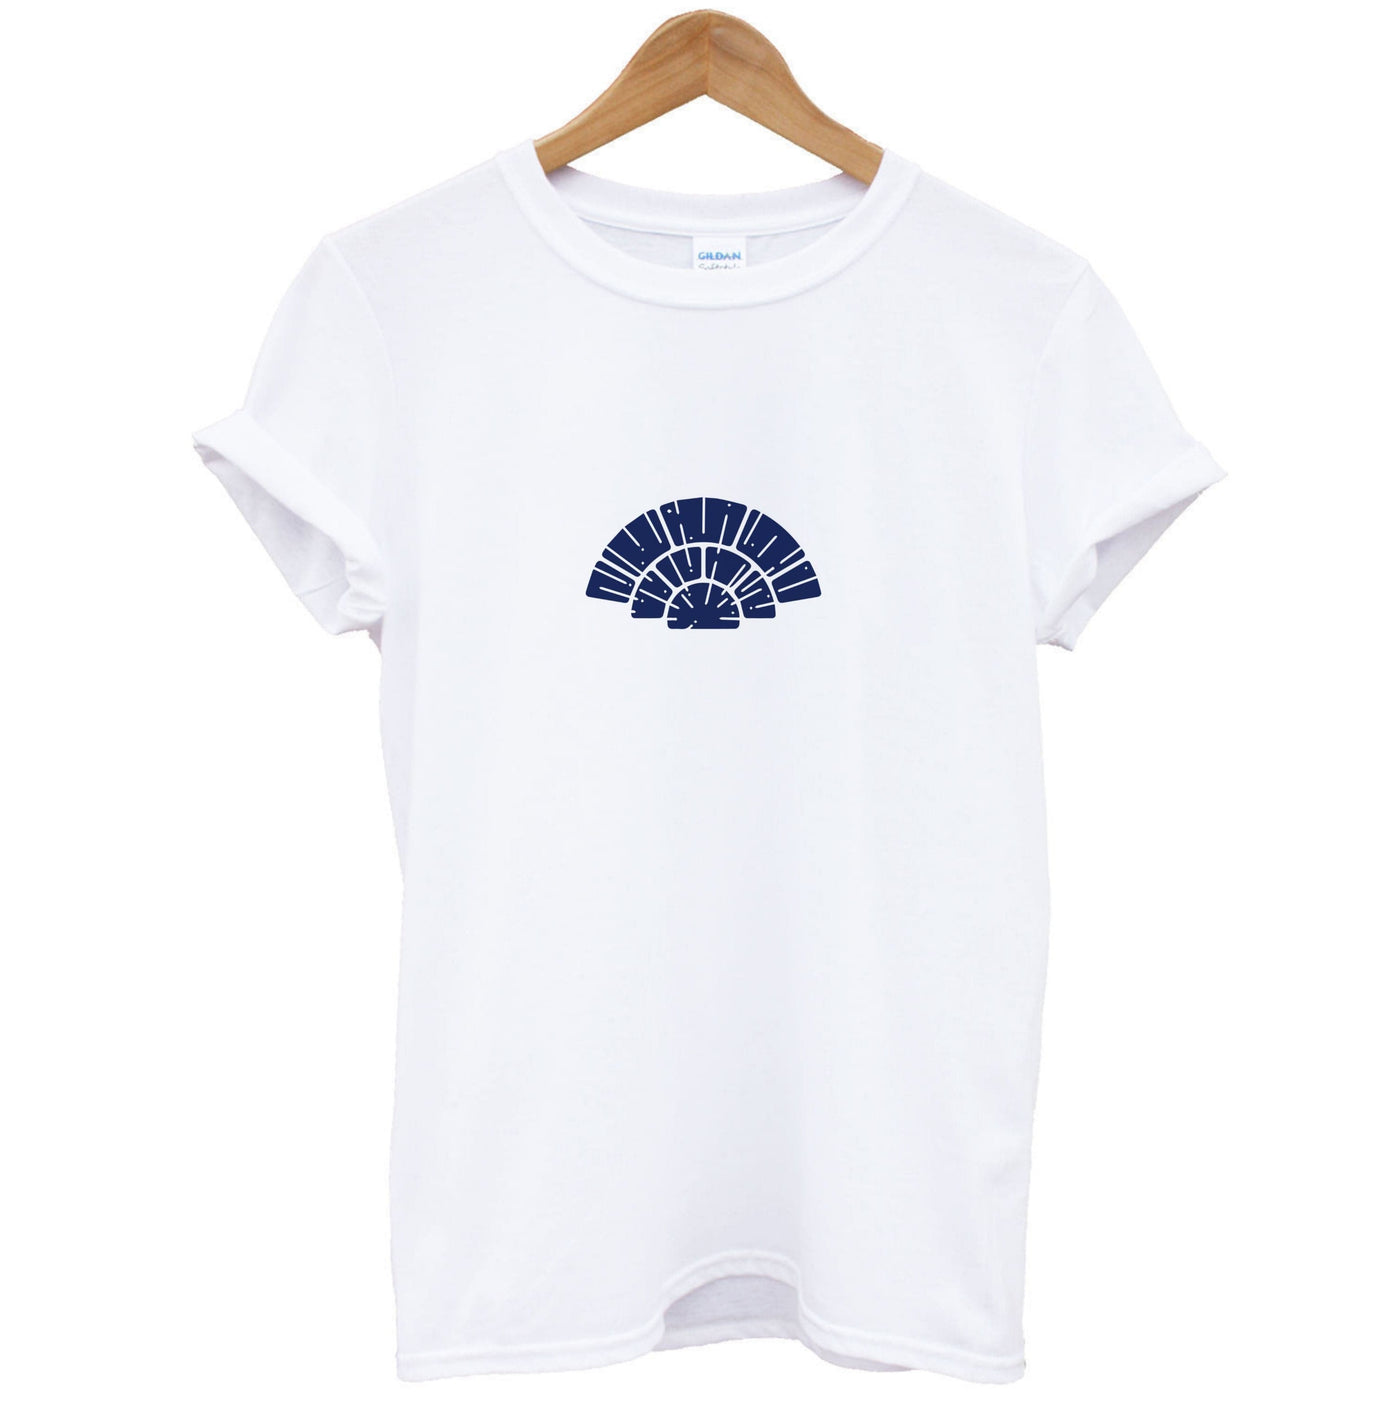 Blue Design - Star Wars T-Shirt